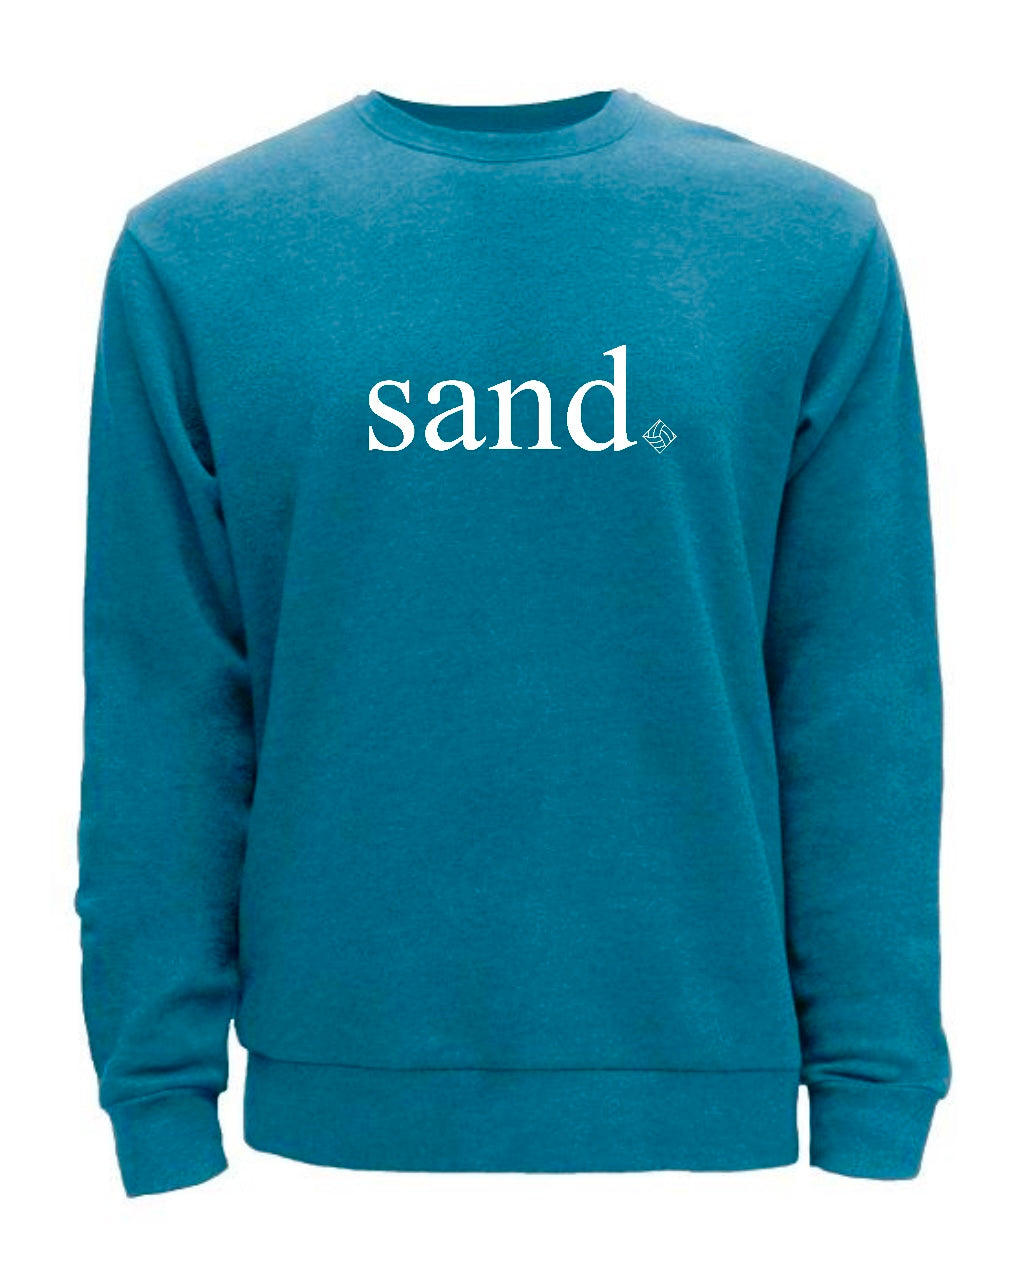 Sand Crewneck Sweatshirt - Solid Colors